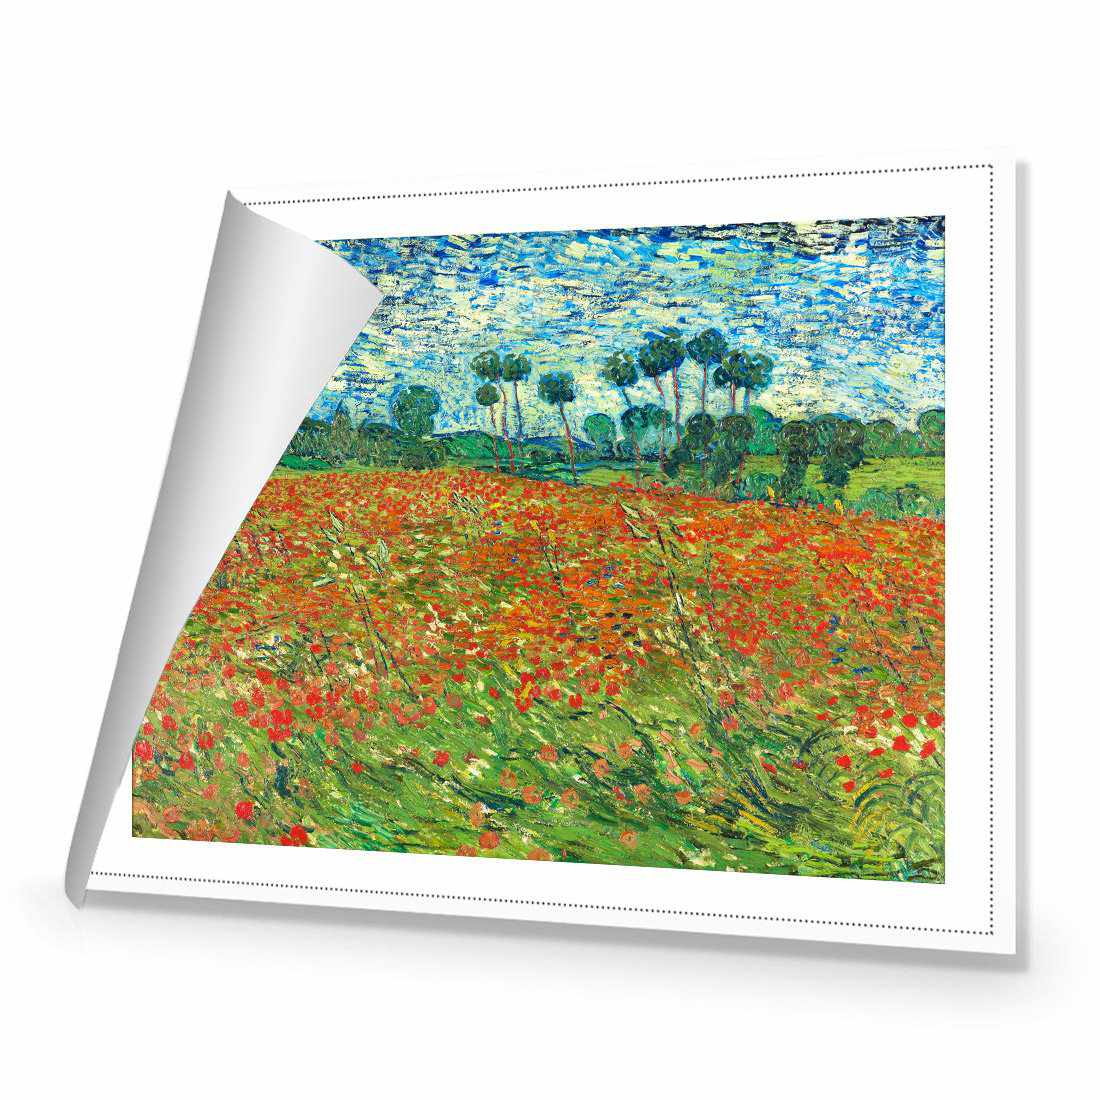 Poppy Field by Van Gogh Canvas Art-Canvas-Wall Art Designs-45x30cm-Rolled Canvas-Wall Art Designs